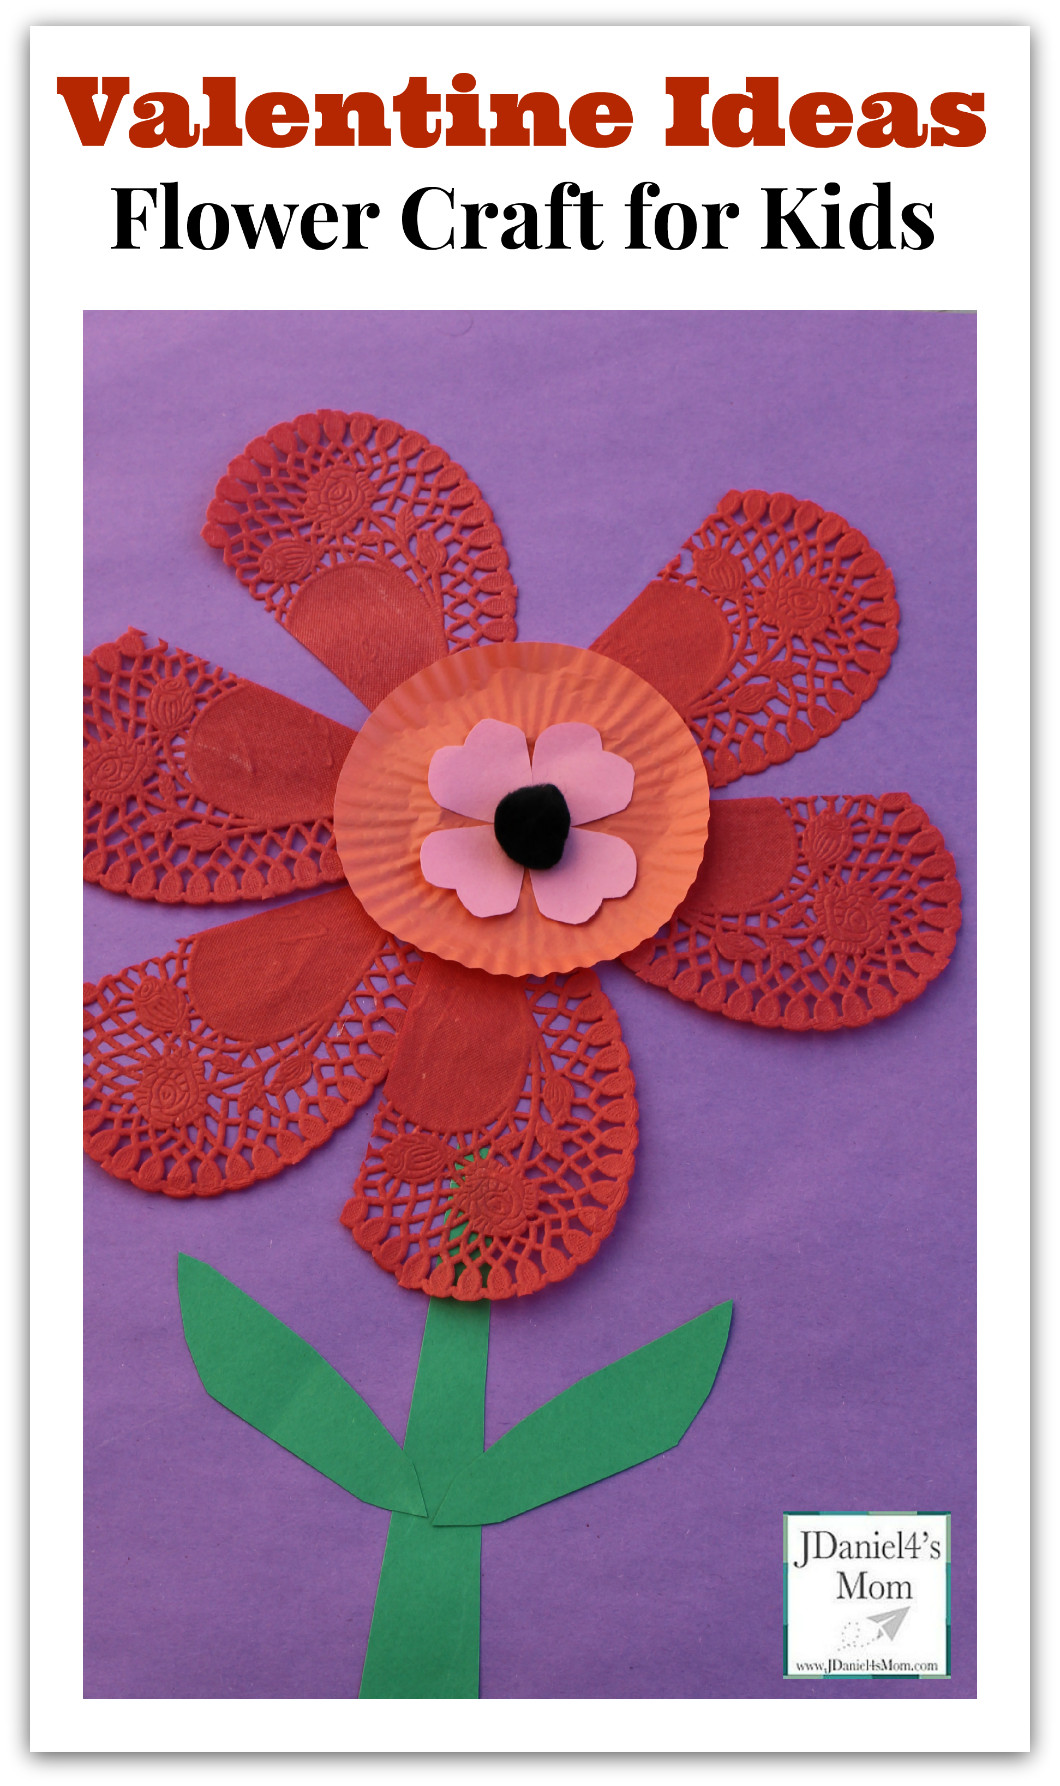 Best ideas about Valentine Craft Ideas For Kids
. Save or Pin Valentine Ideas Flower Craft for Kids Now.